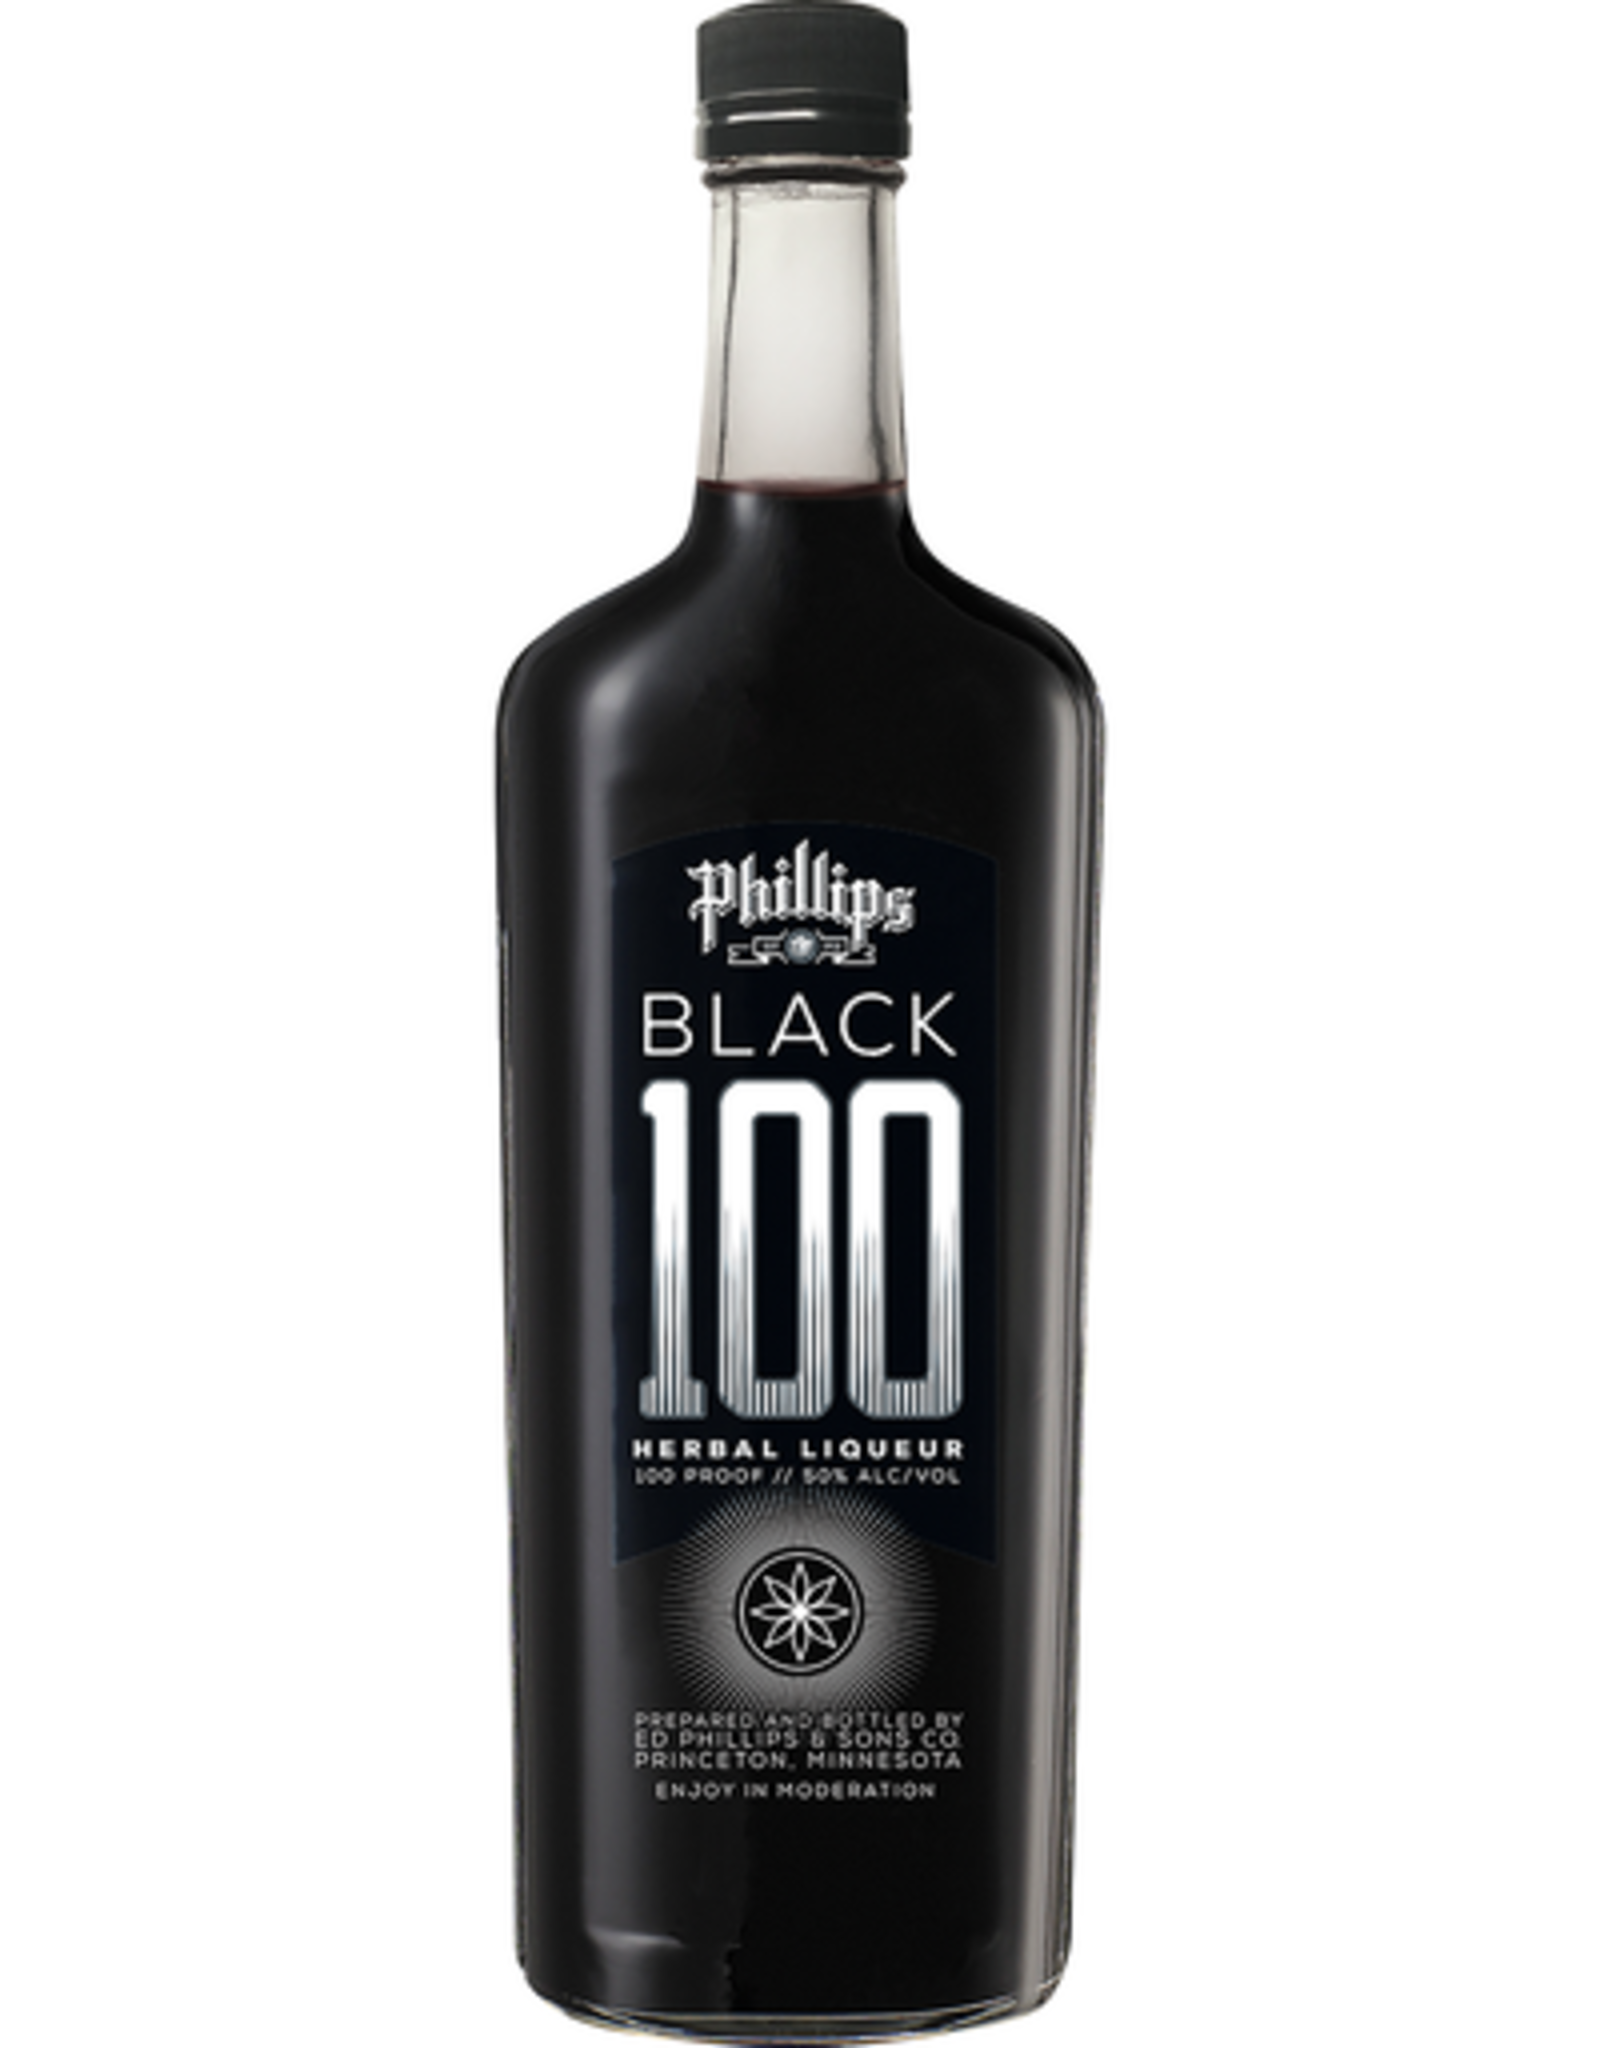 Phillips Phillips Black Herbal Liqueur 100 Proof